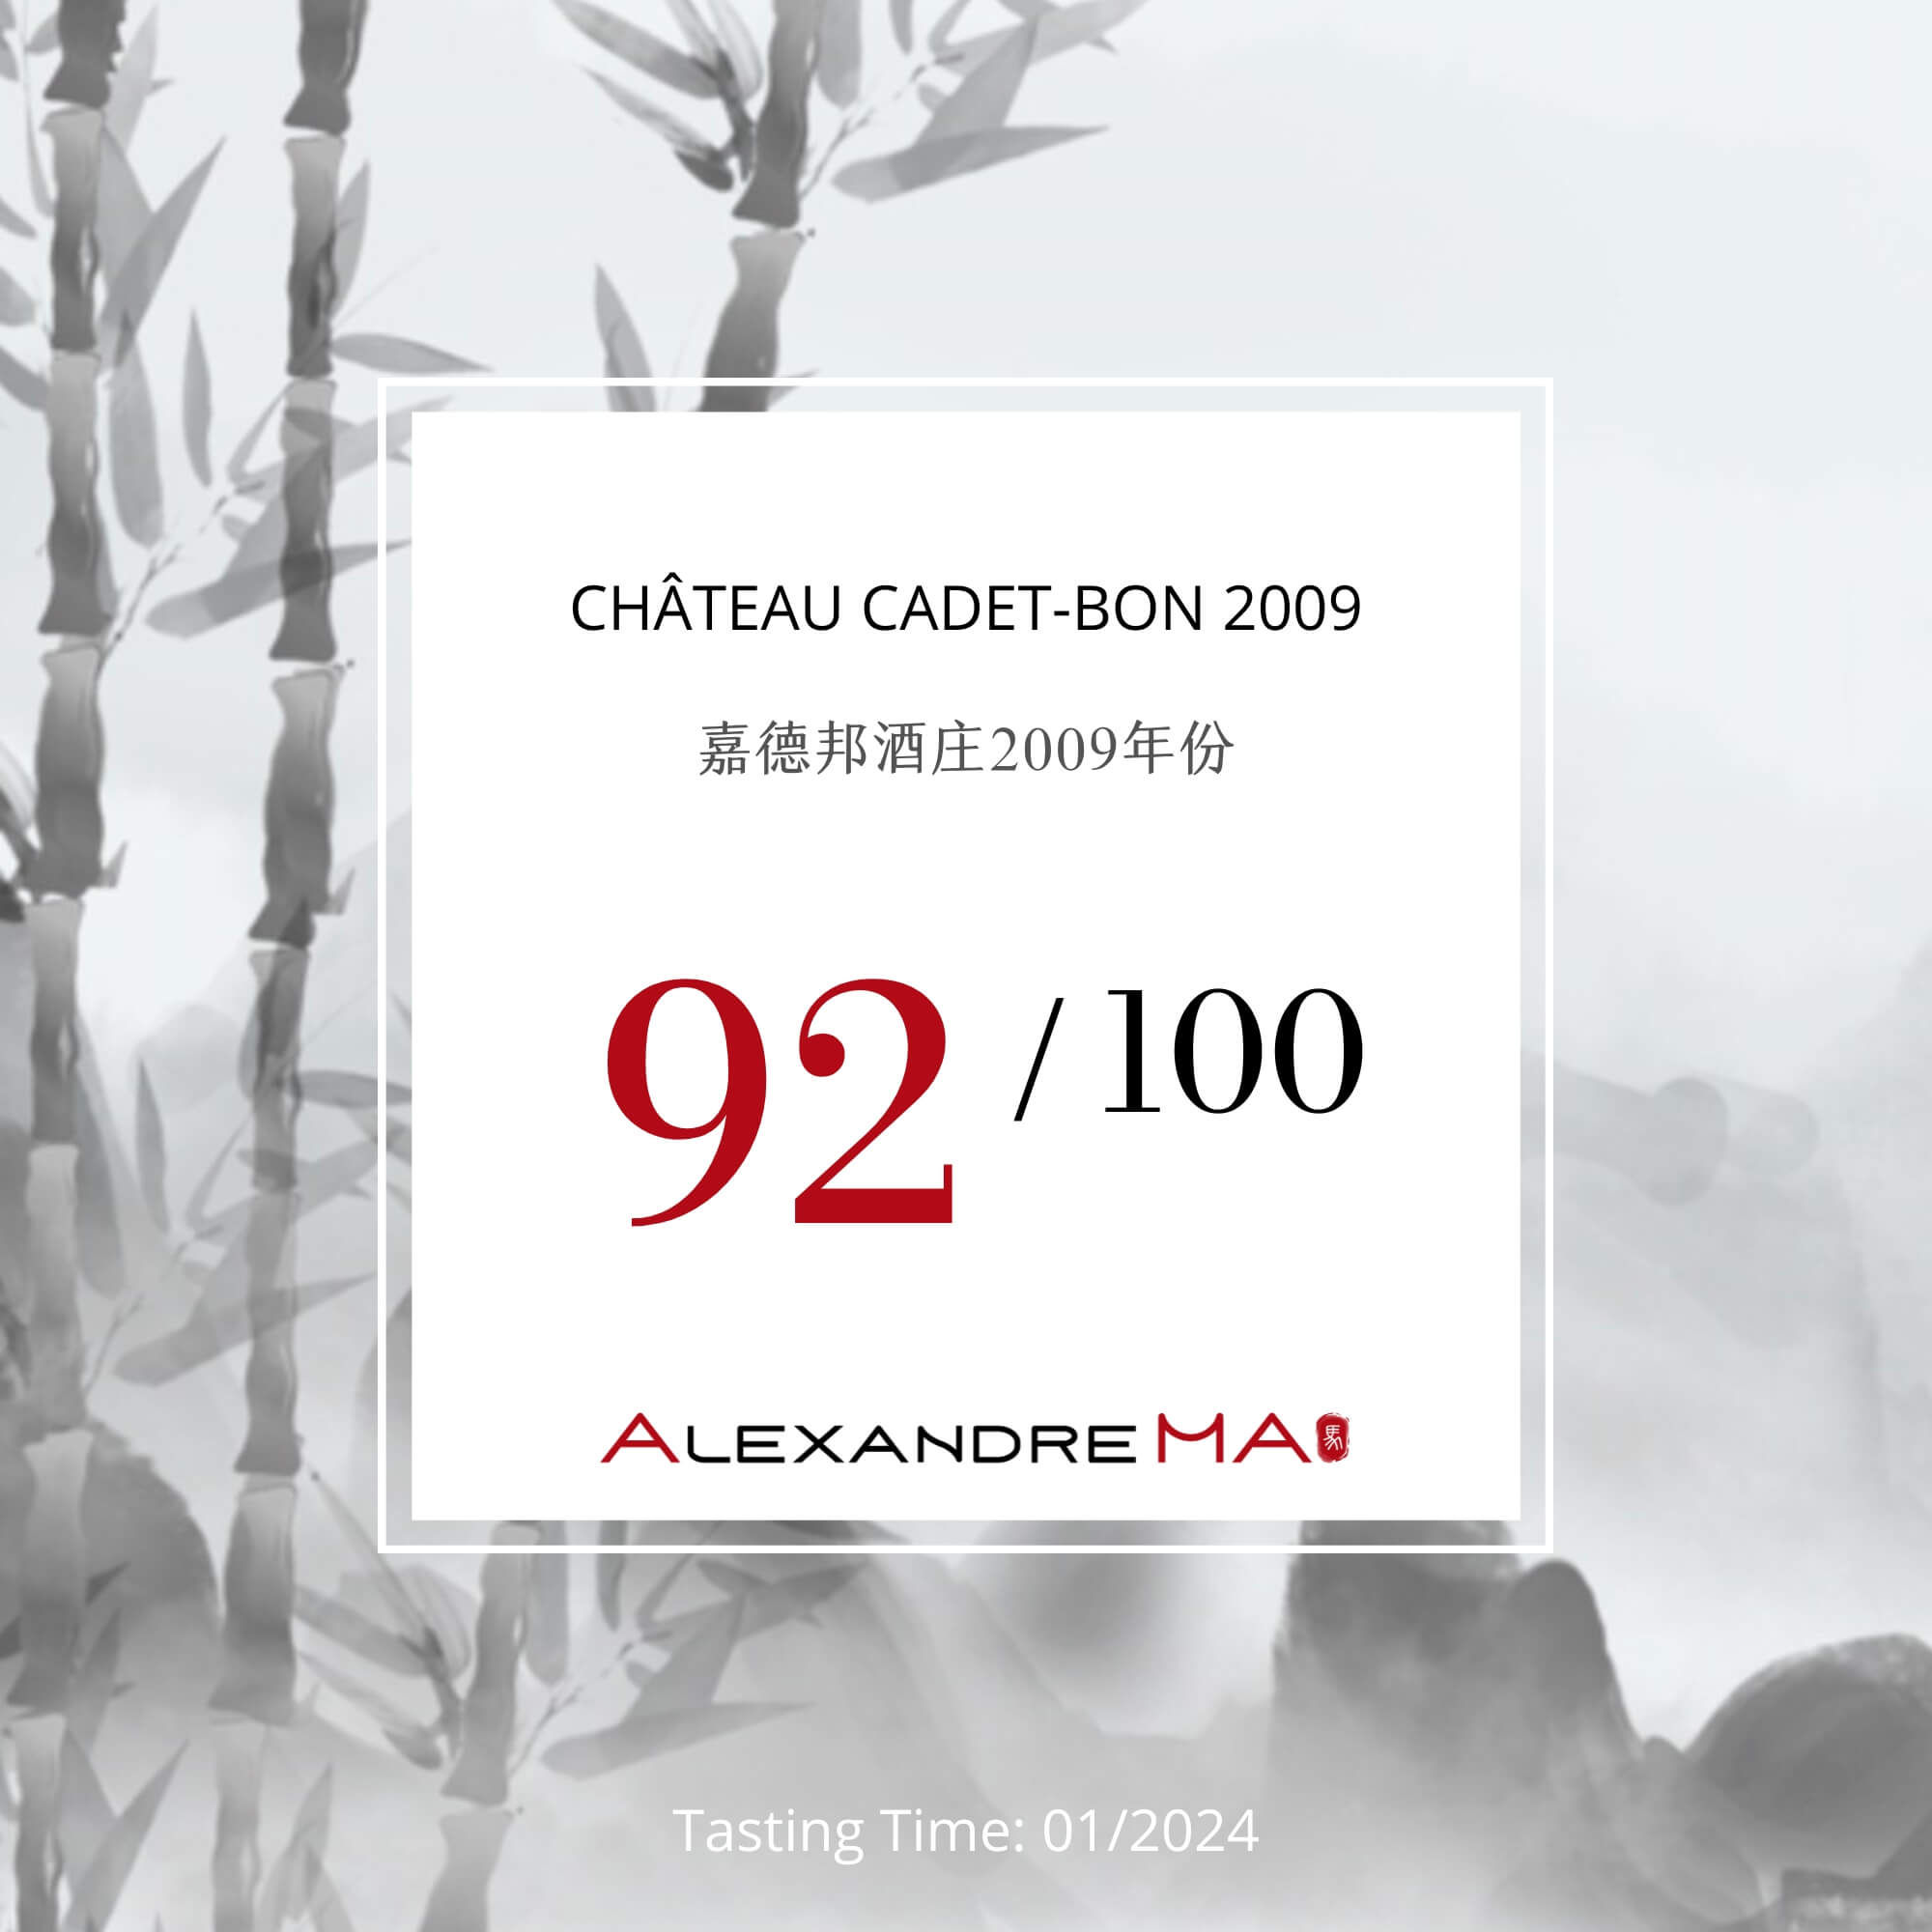 Château Cadet-Bon 2009 - Alexandre MA